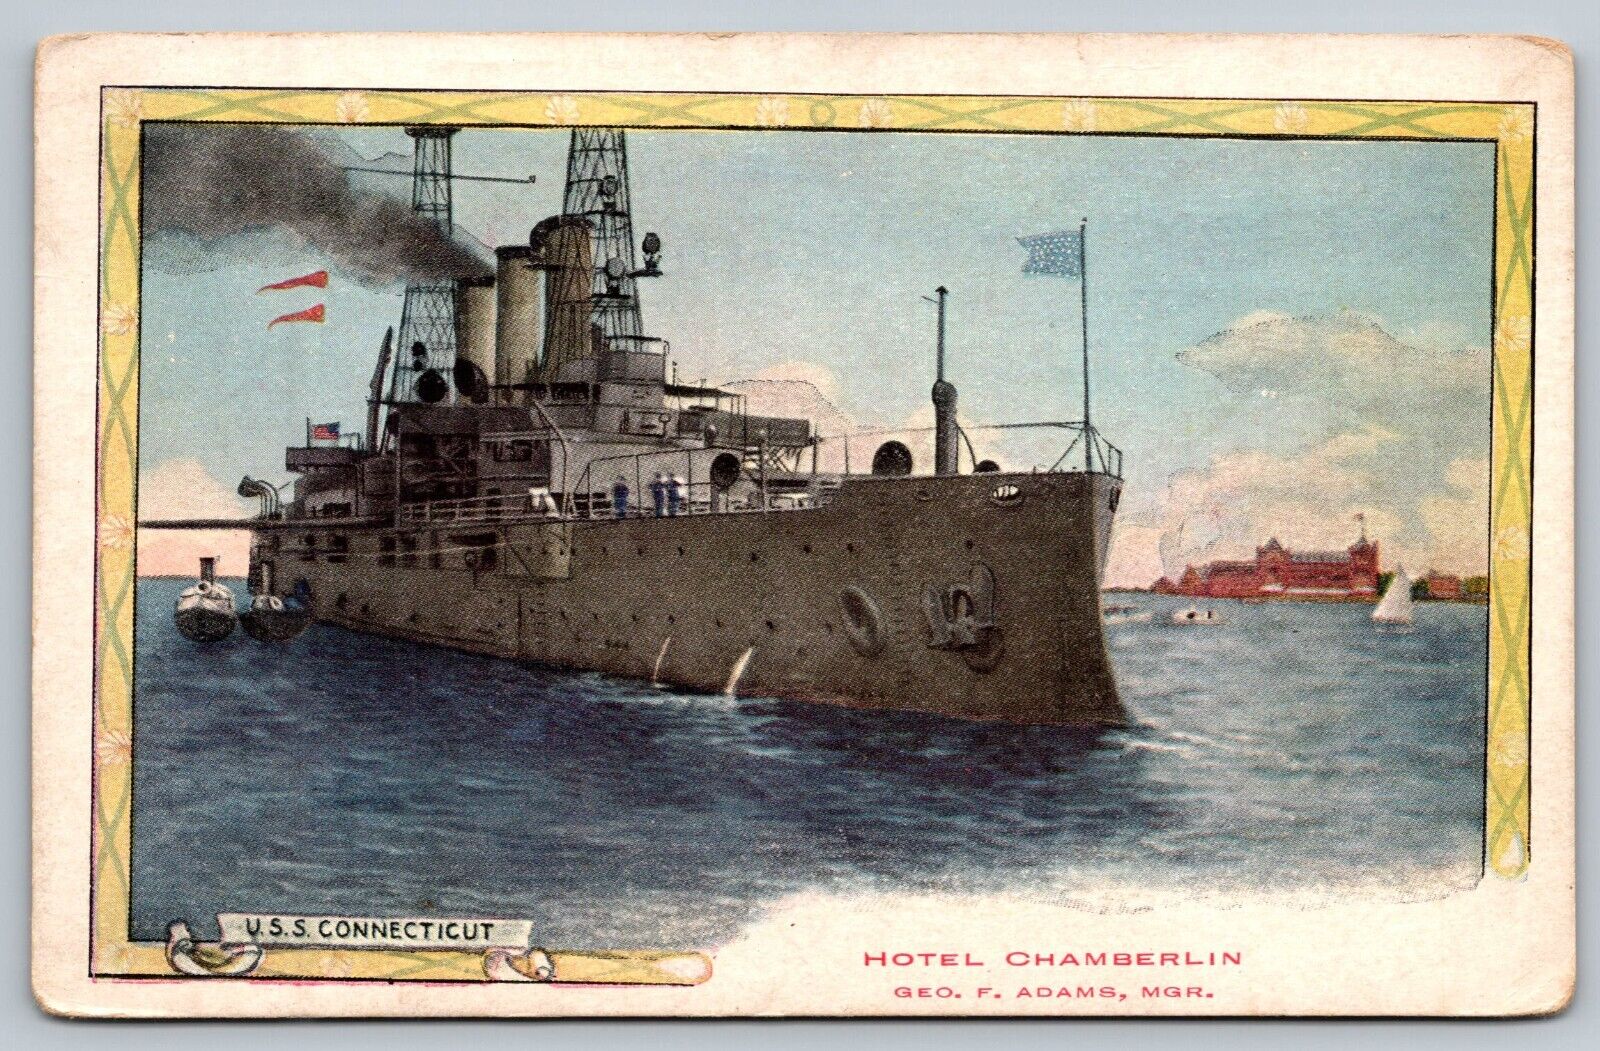 USS CONNECTICUT US Navy ship ~ Hotel Chamberlain Fortress Monroe VA advertising